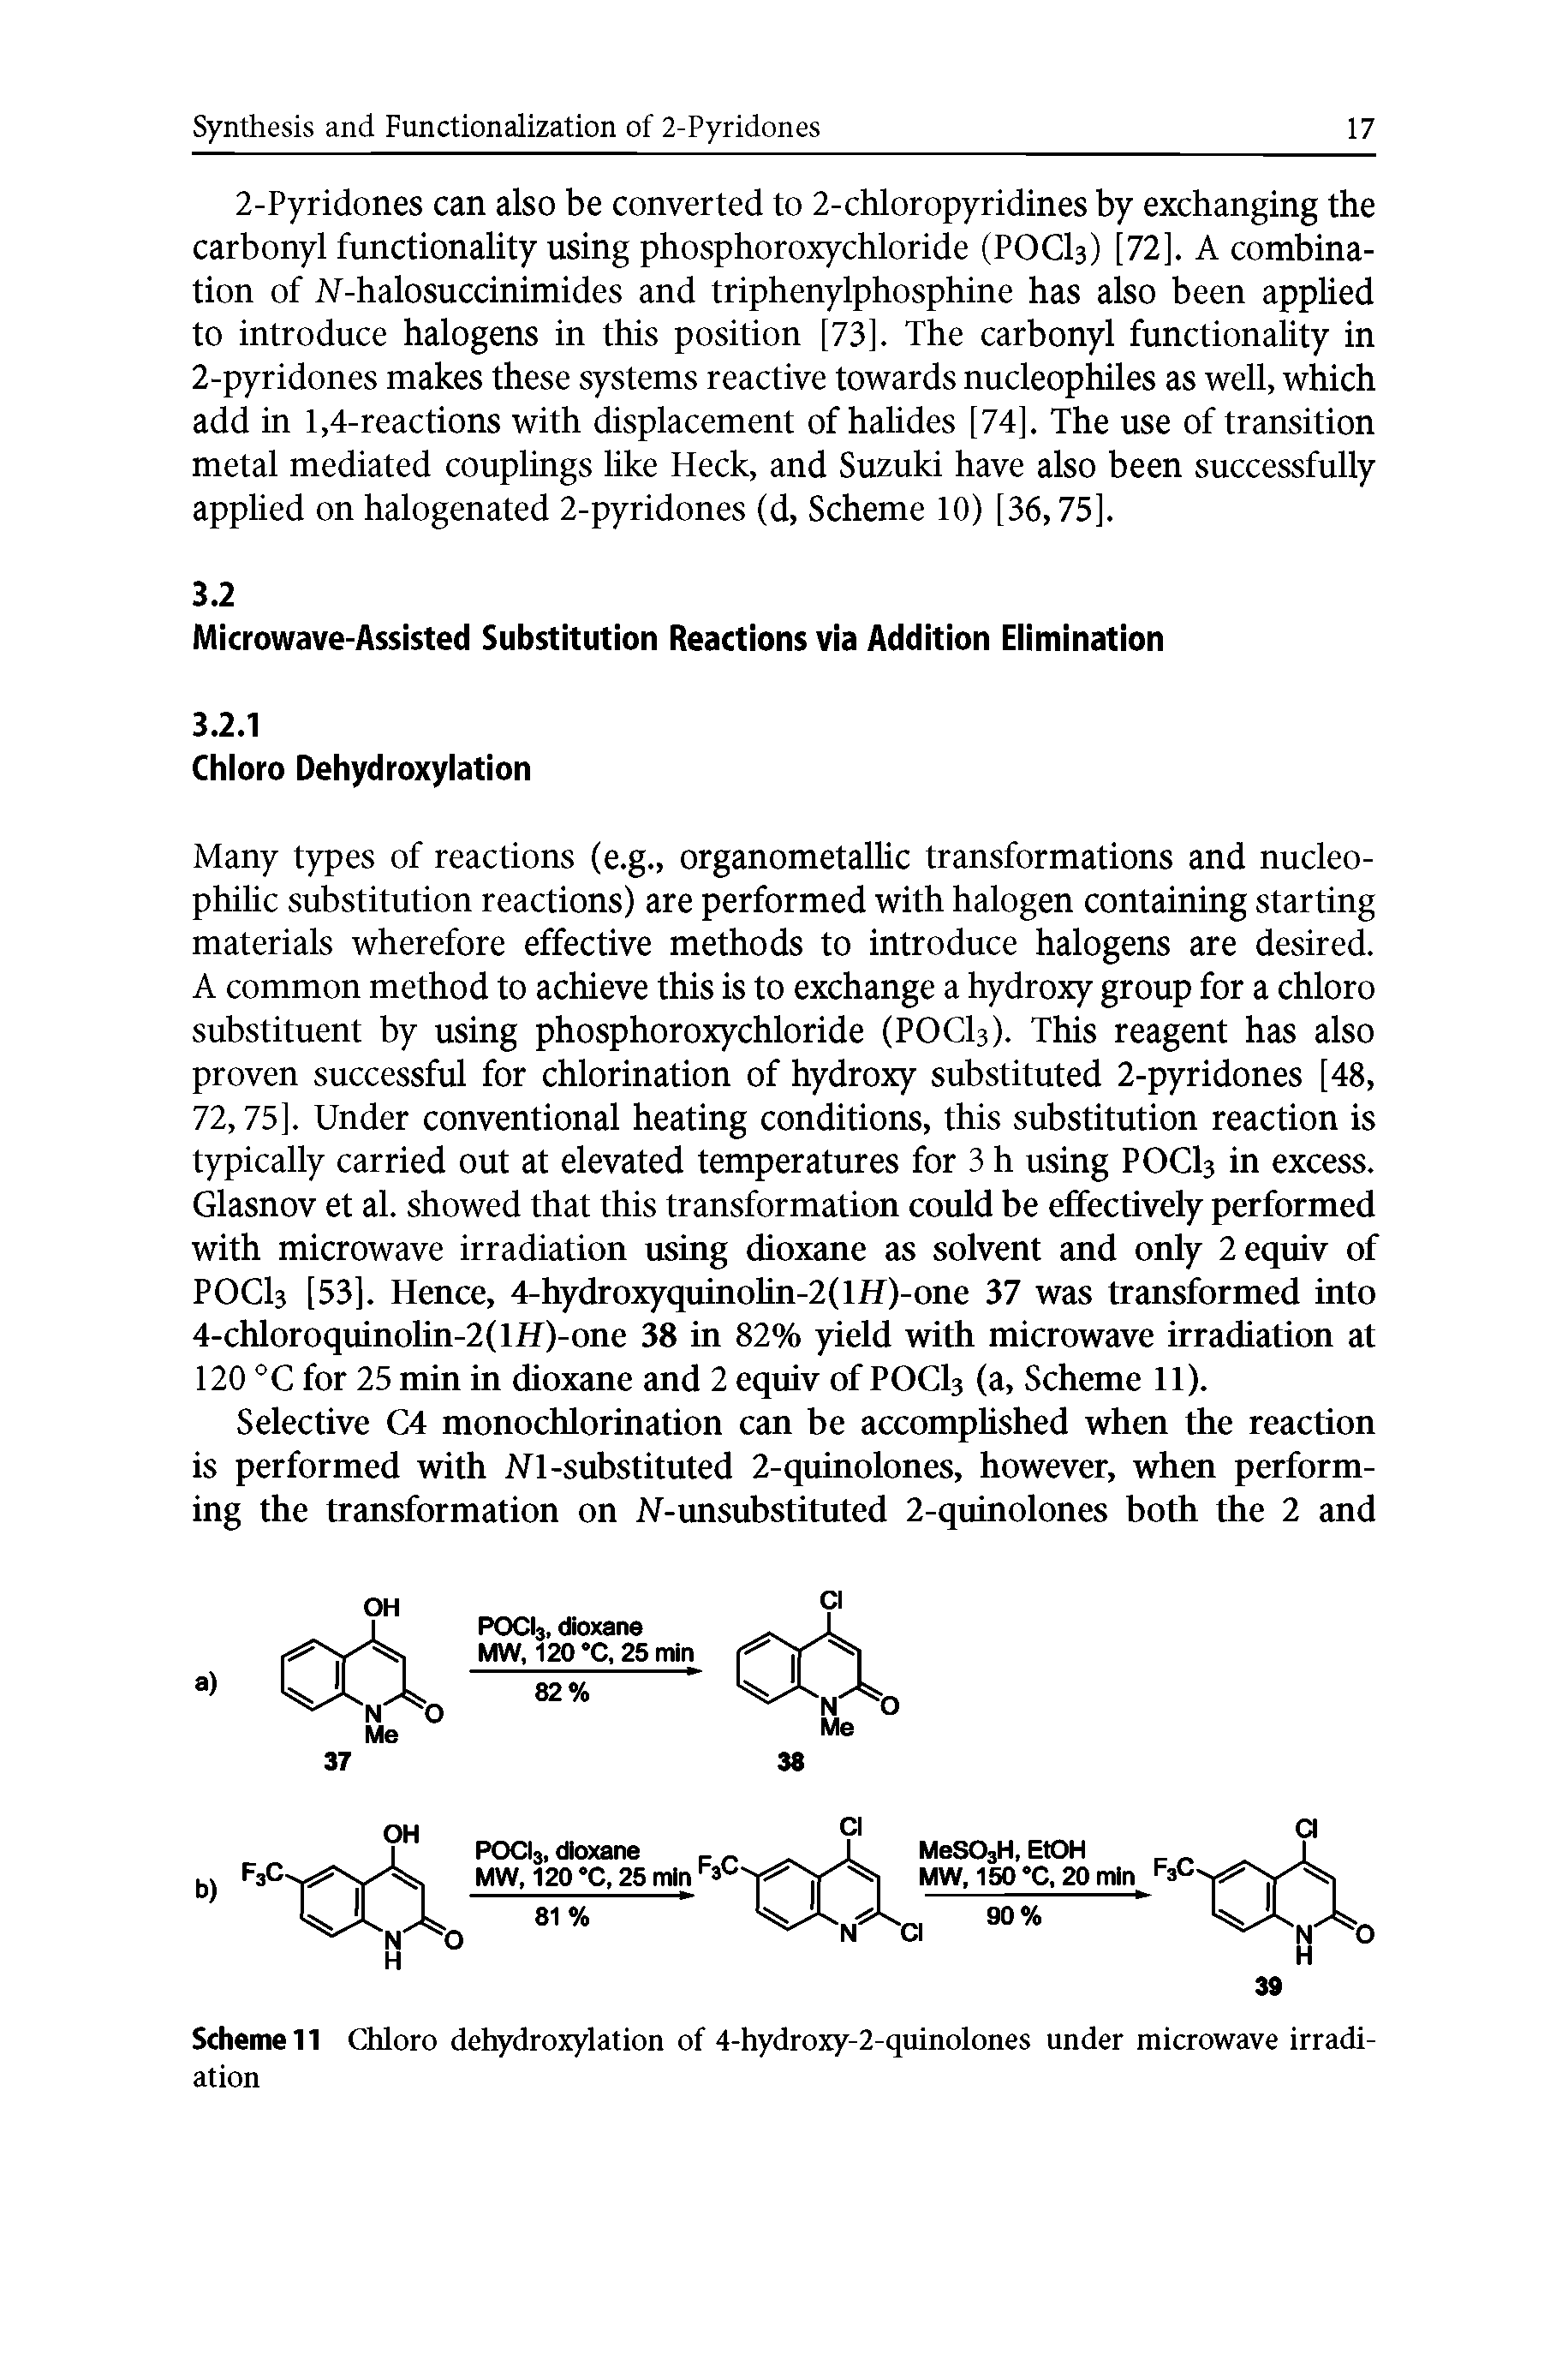 Scheme 11 Chloro dehydroxylation of 4-hydroxy-2-qninolones under microwave irradiation...